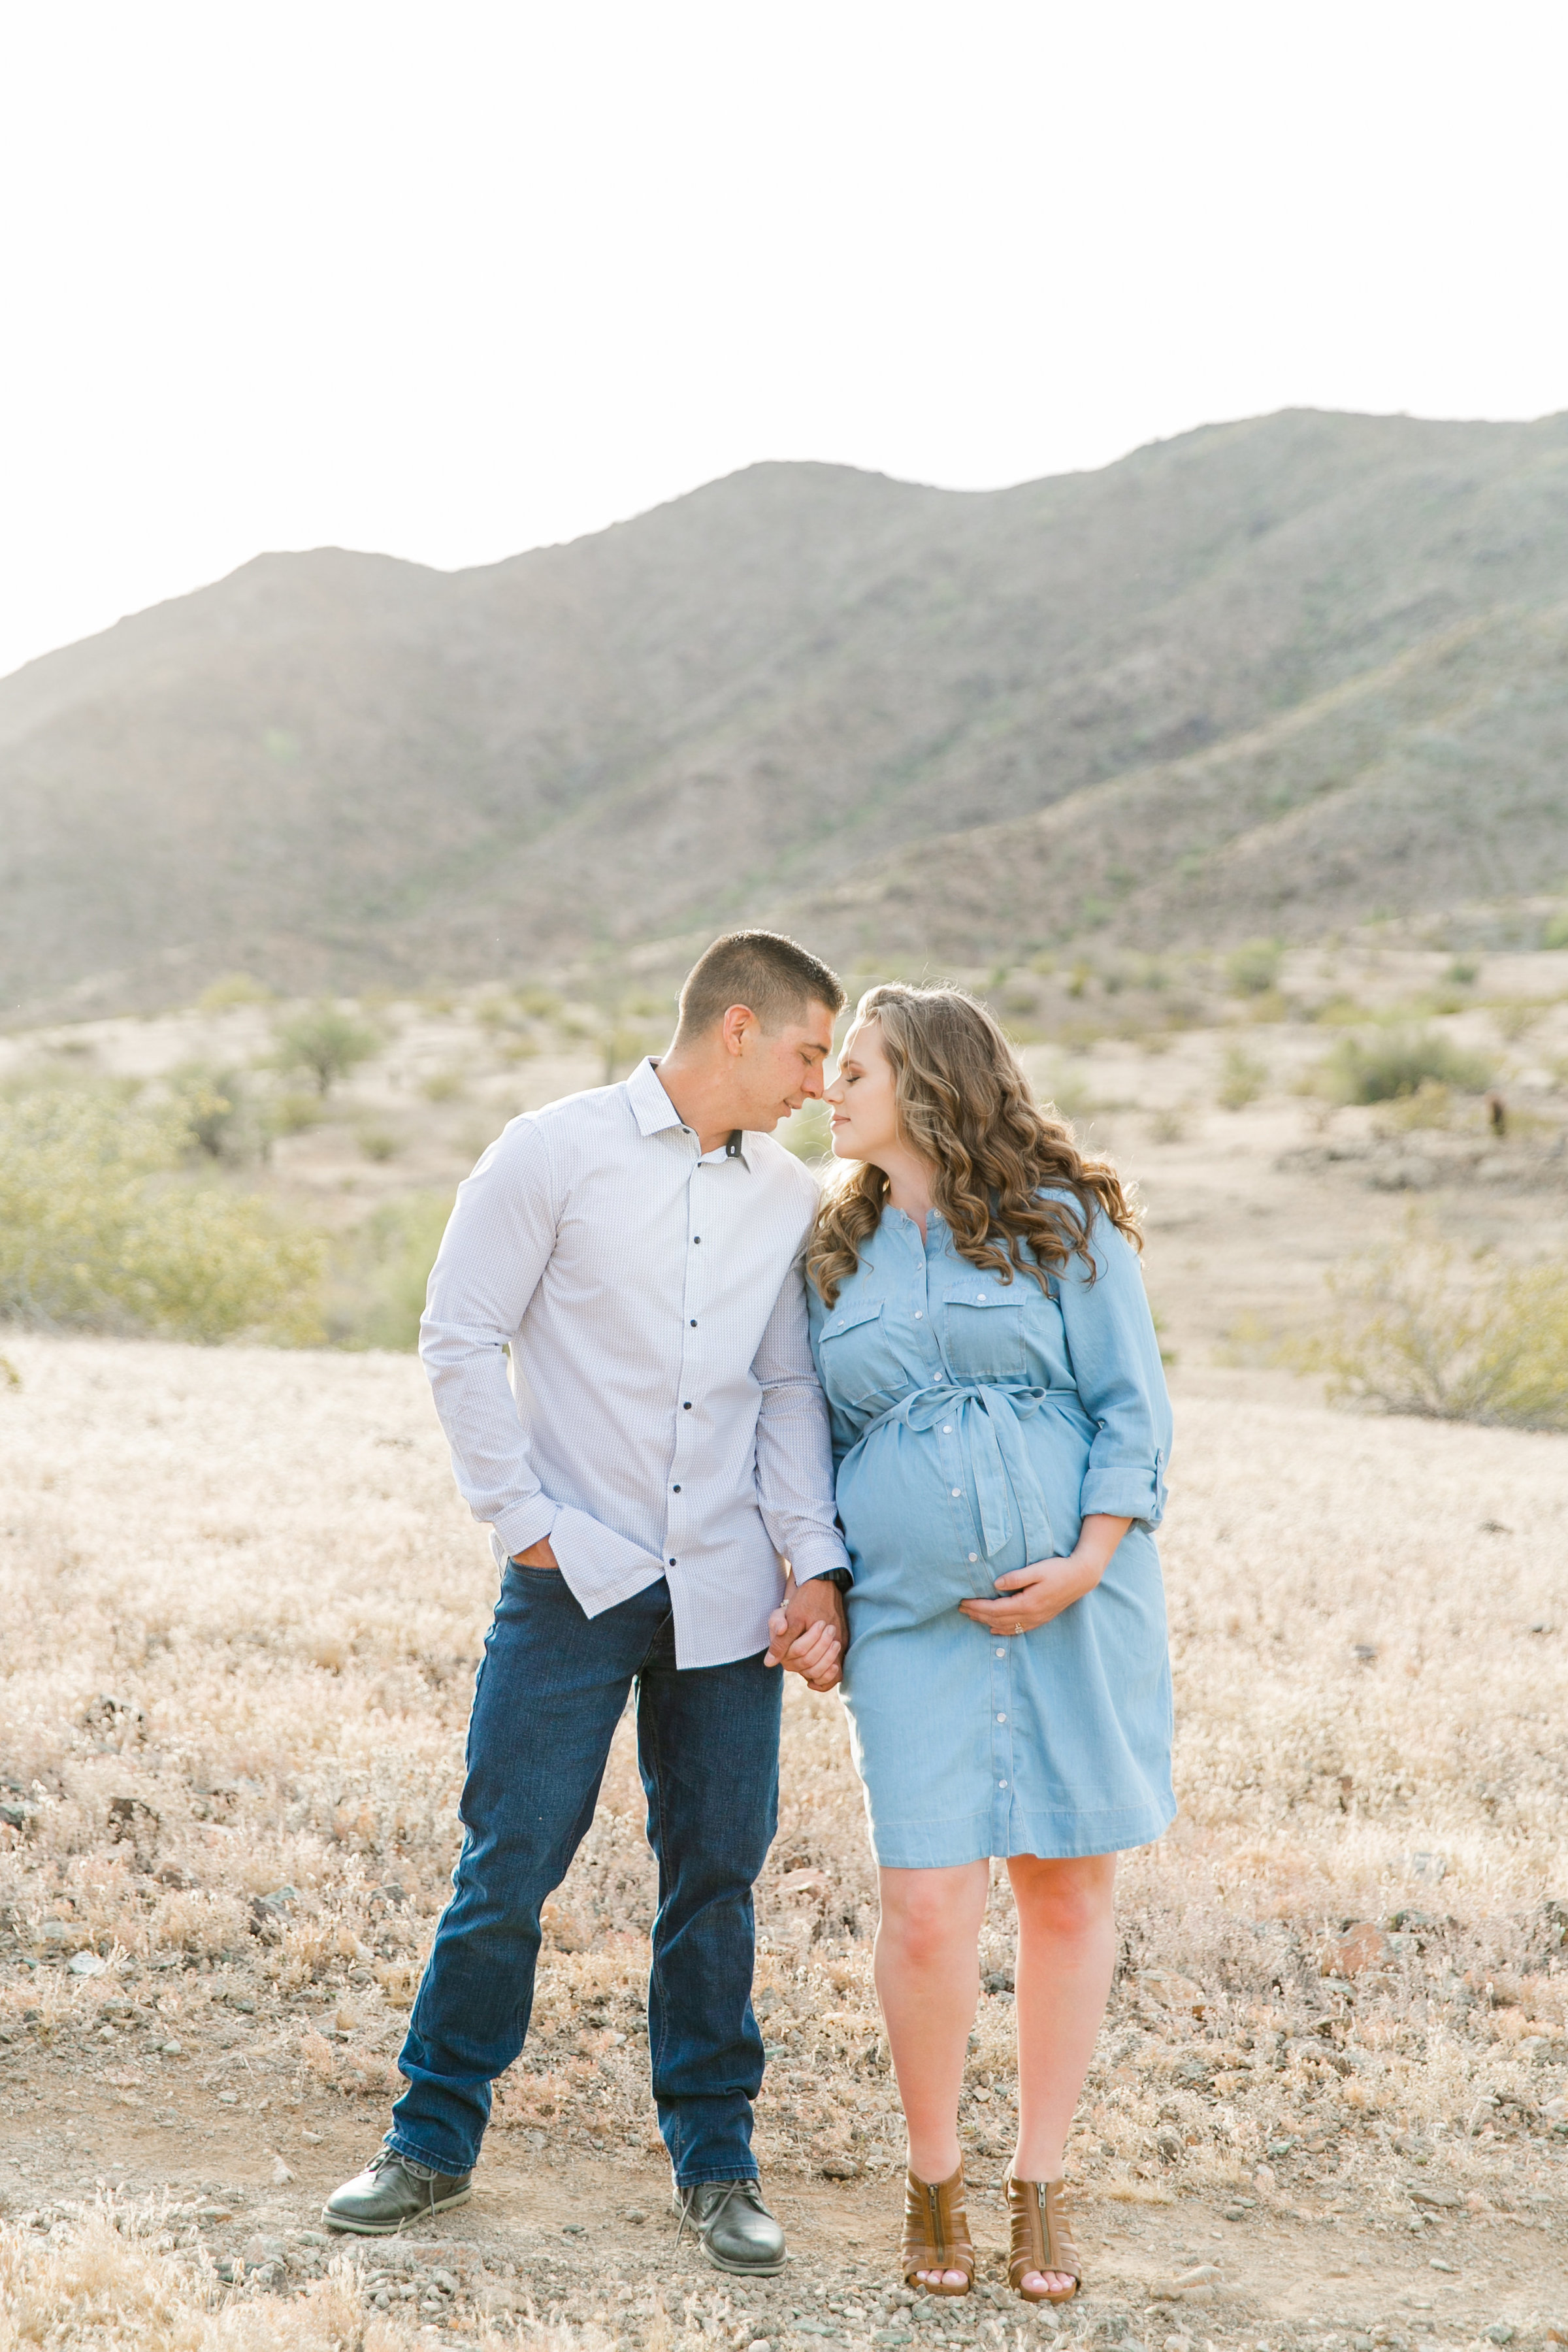 Karlie Colleen Photography - Arizona Maternity Photography-6